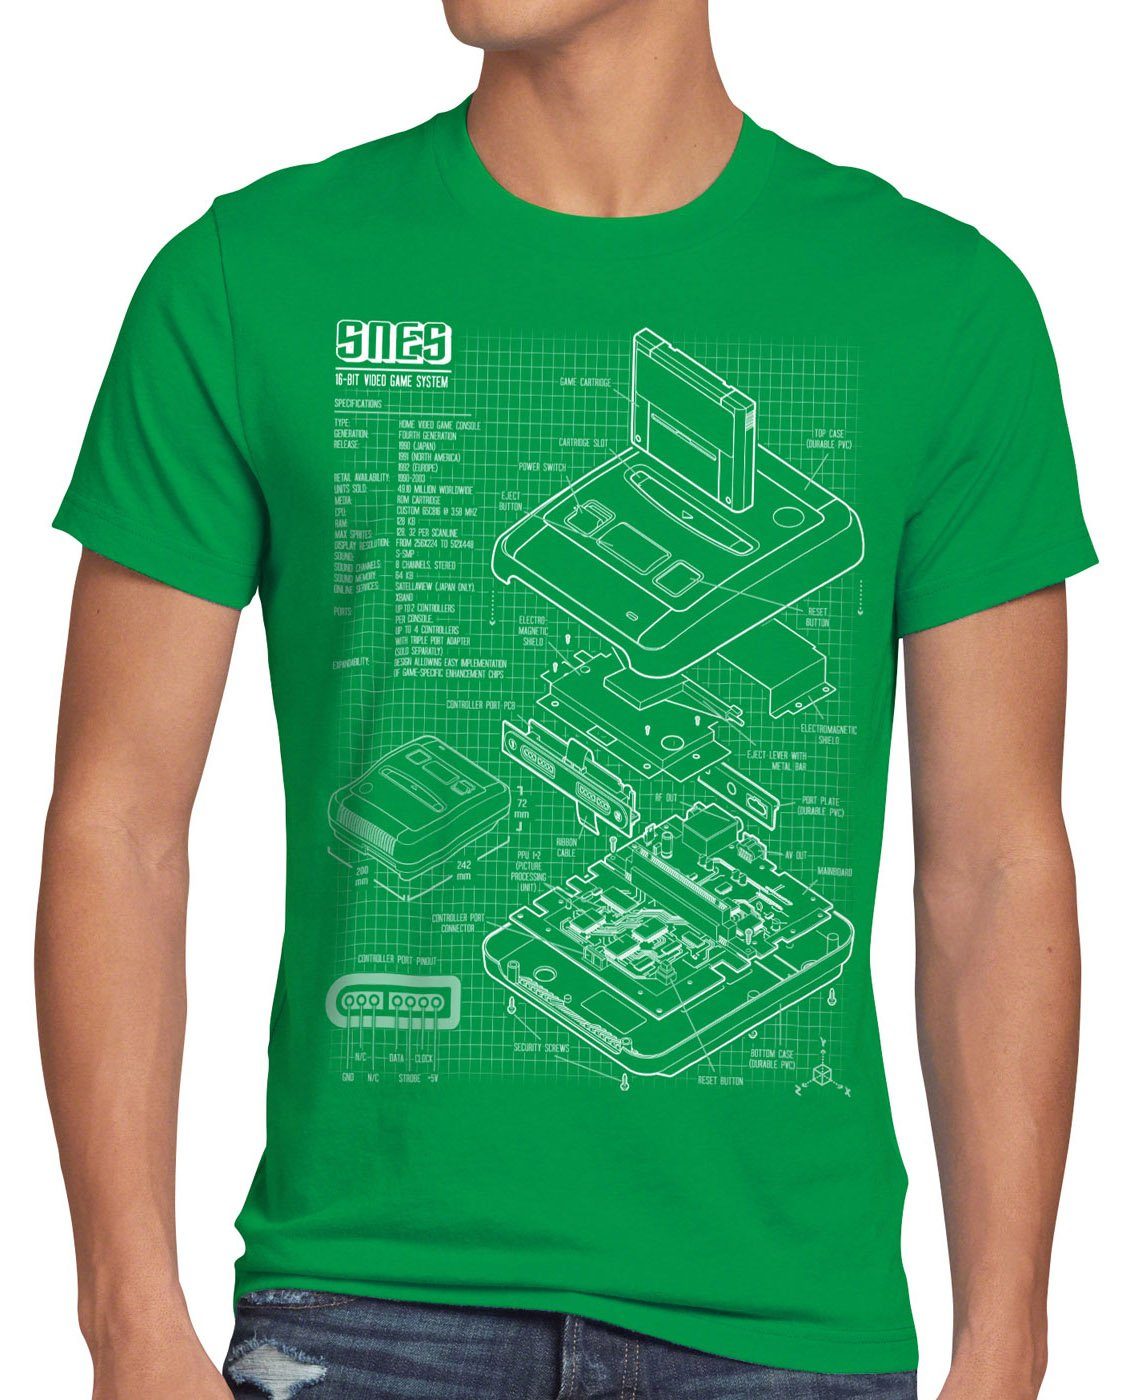 style3 Print-Shirt Herren T-Shirt SNES Blaupause 16-Bit Videospiel grün | T-Shirts